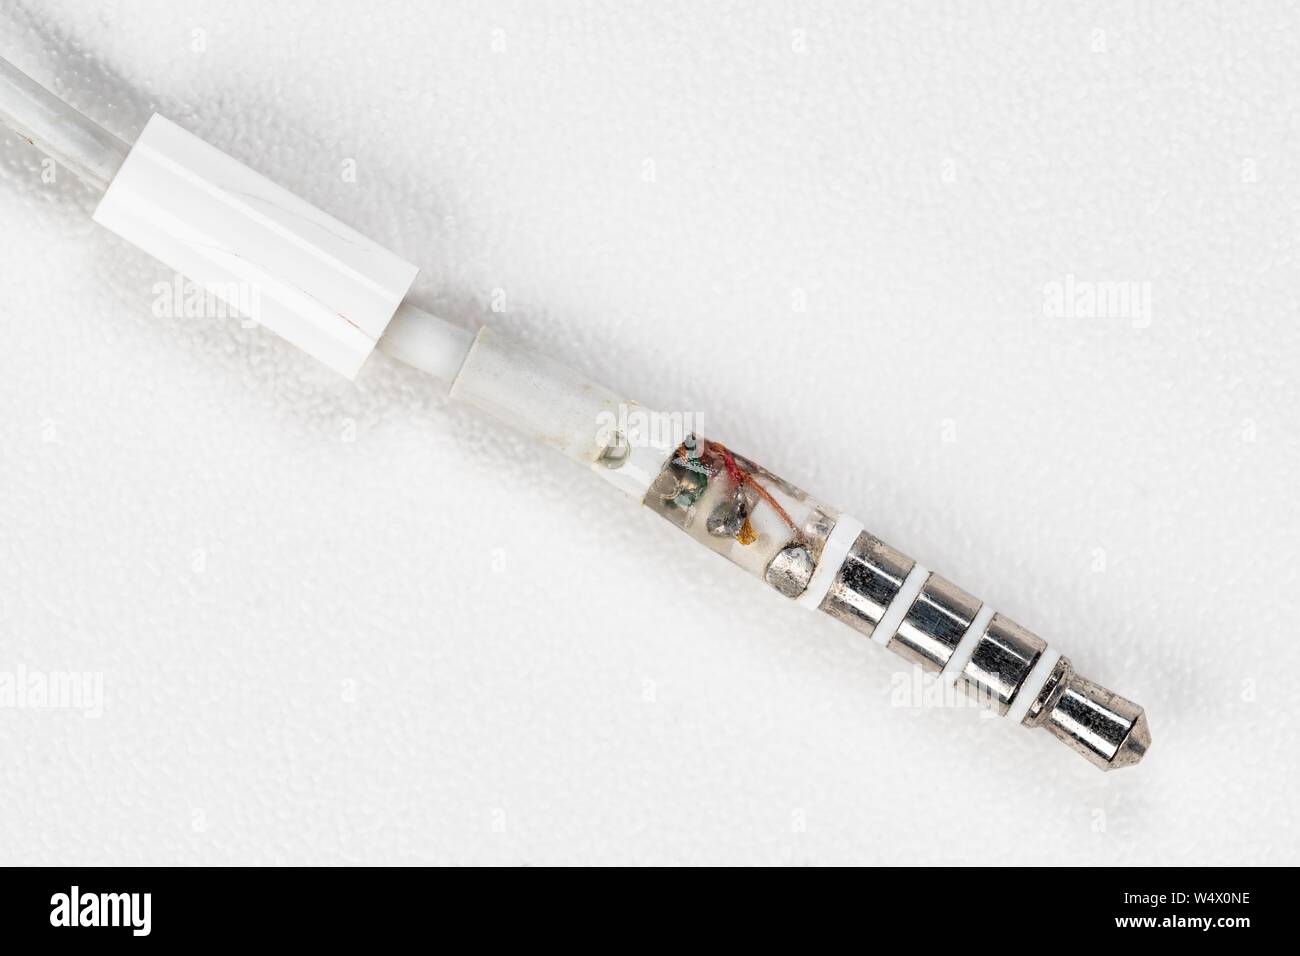 Close-up a broken headphone jack on white background. Stock Photo